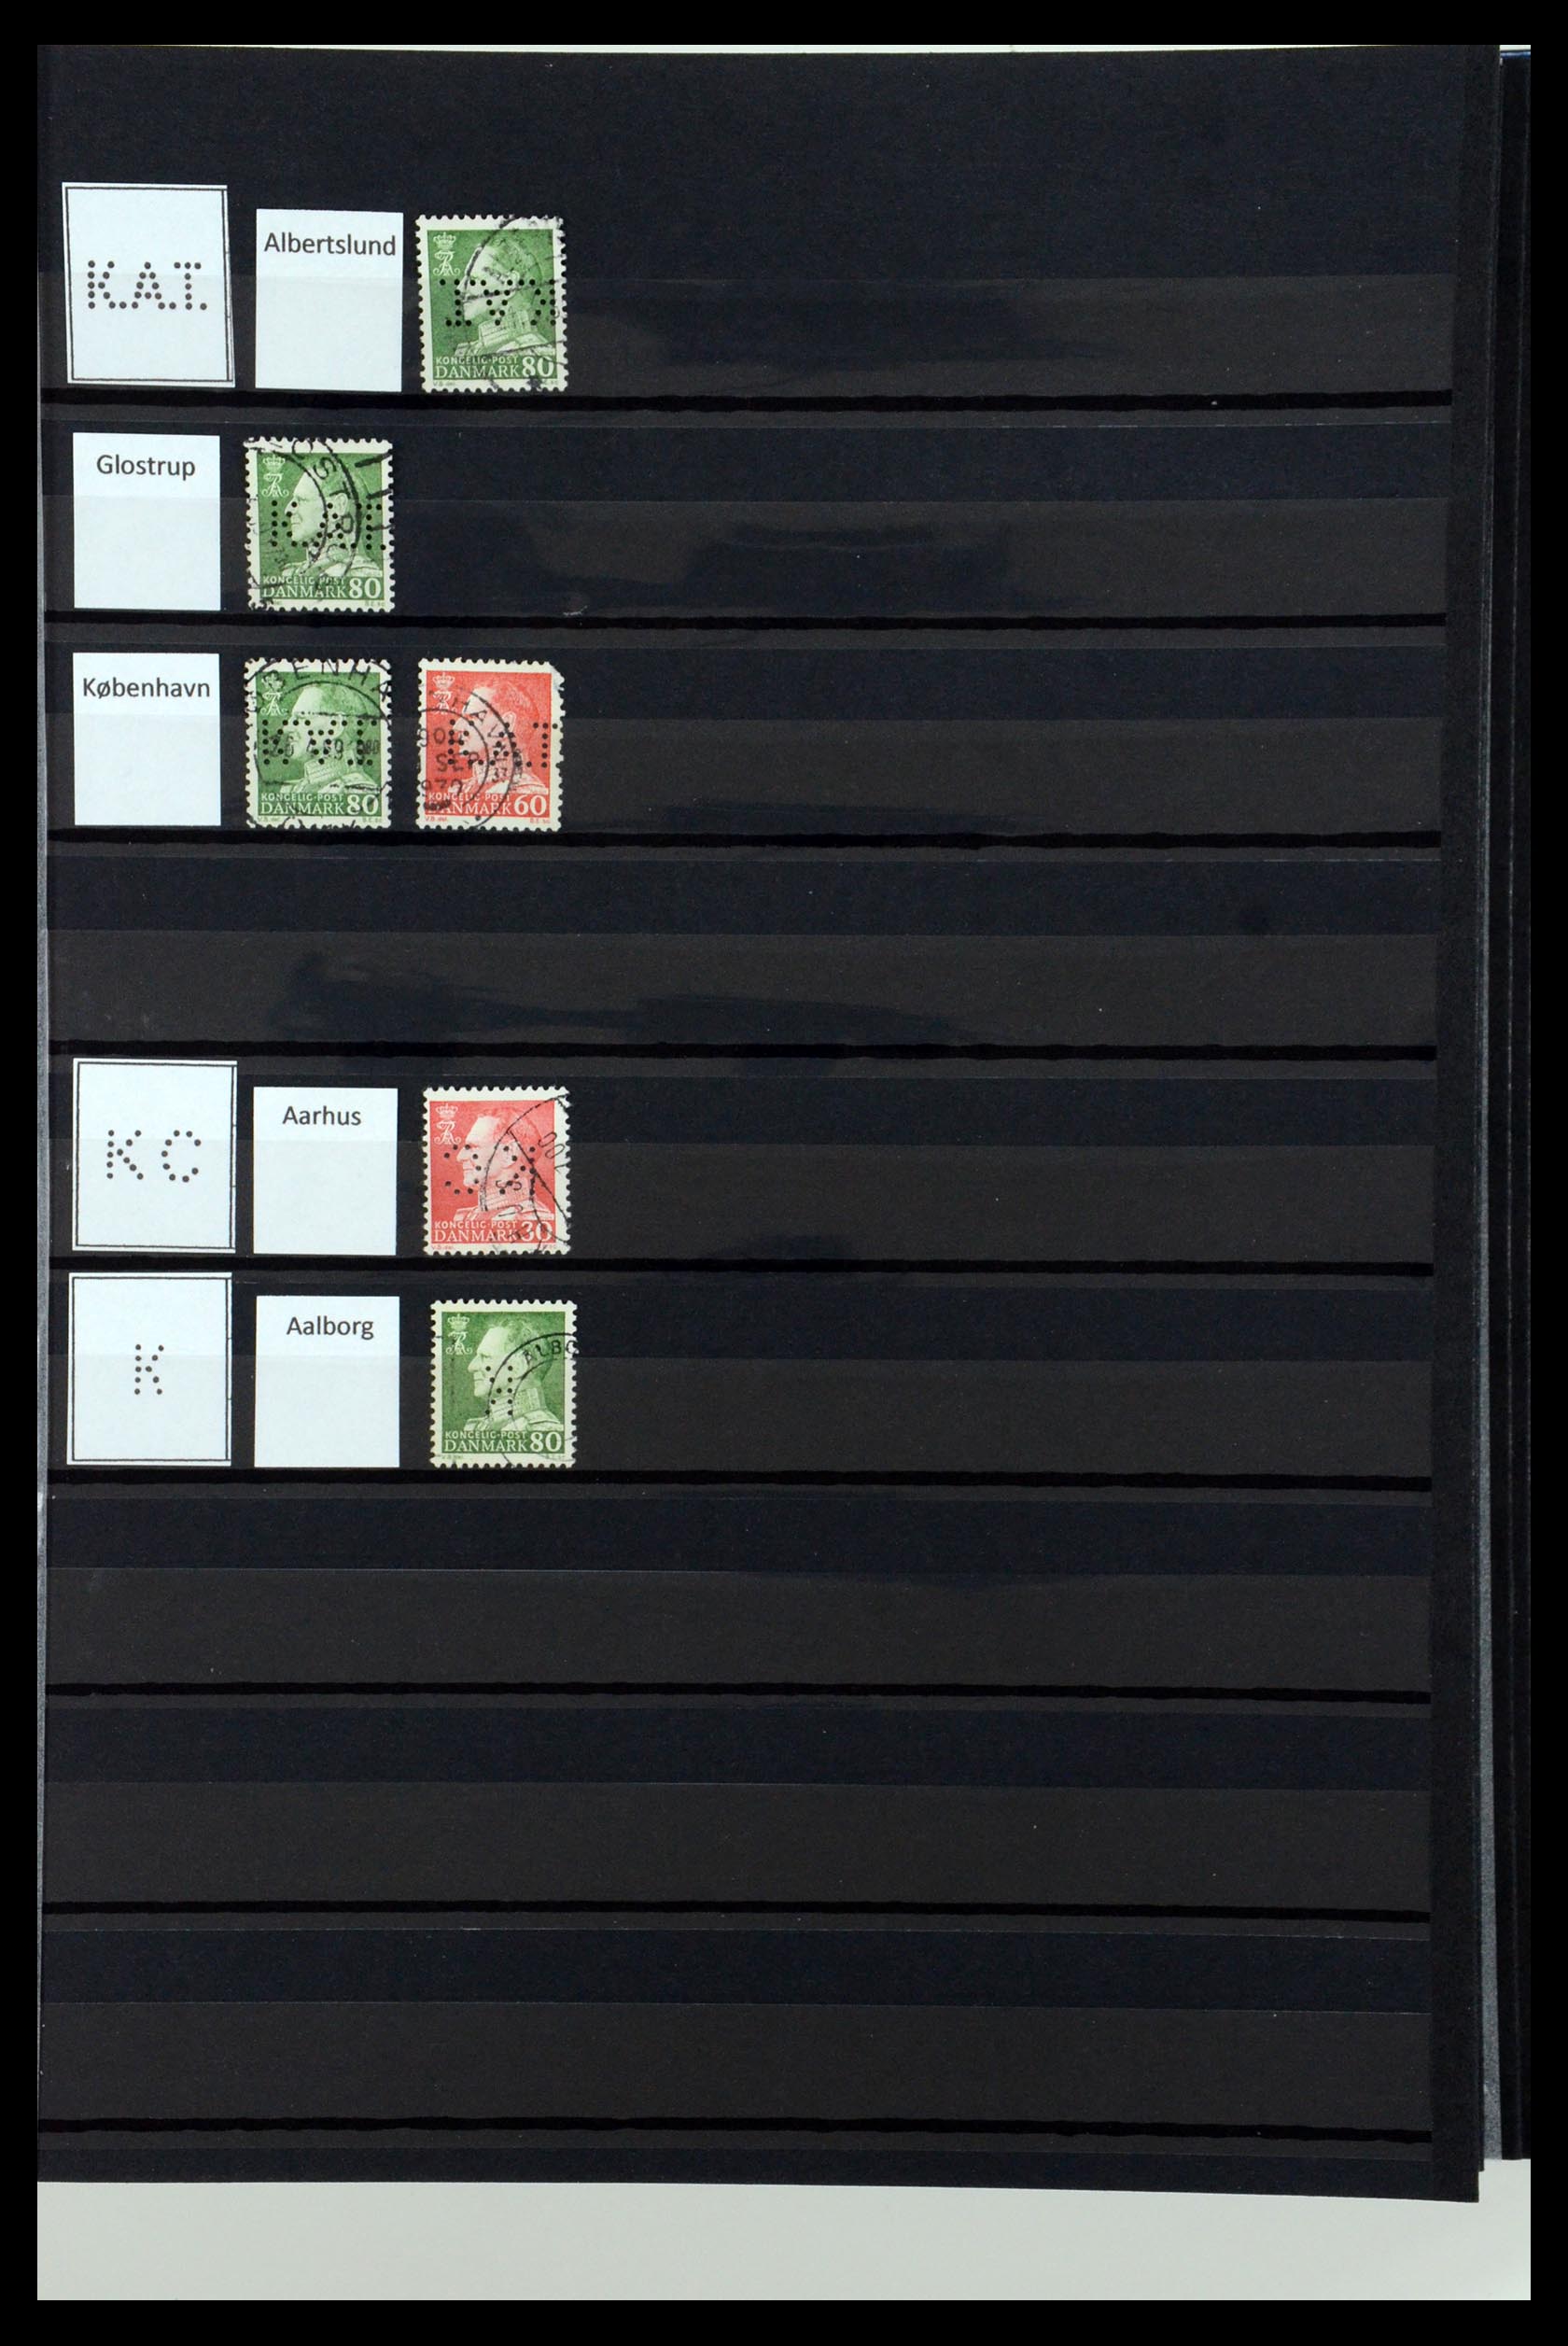 36396 082 - Stamp collection 36396 Denmark perfins.